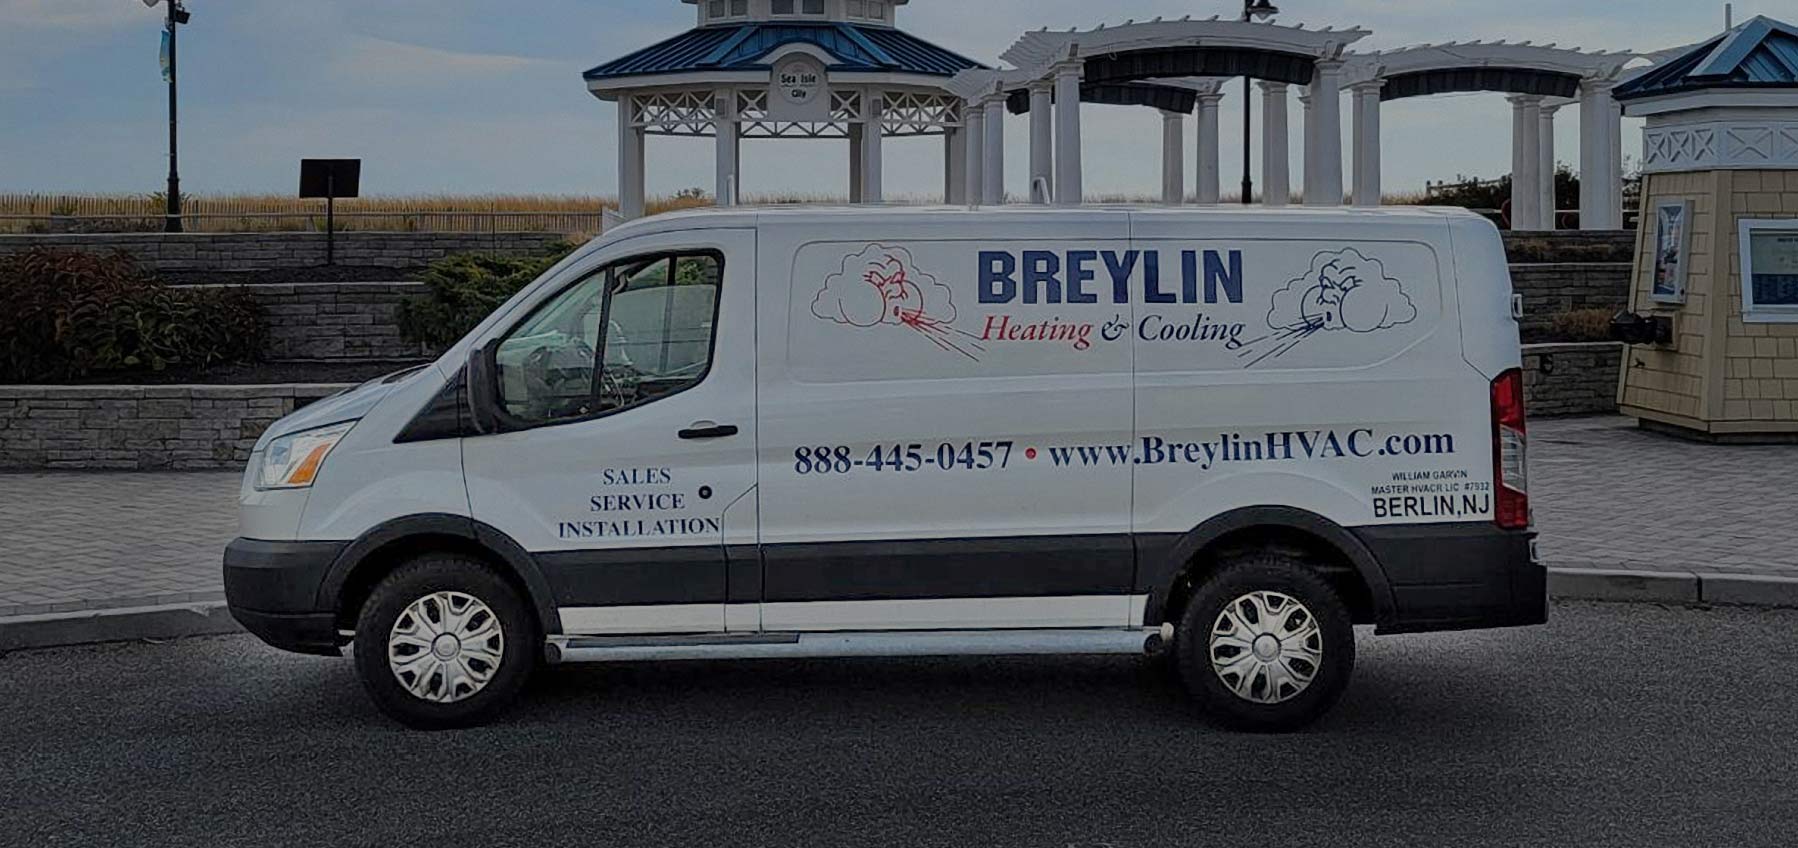 Breylin Heating & Cooling | Sea Isle City NJ 08243 Heater Air Conditioner HVAC Service